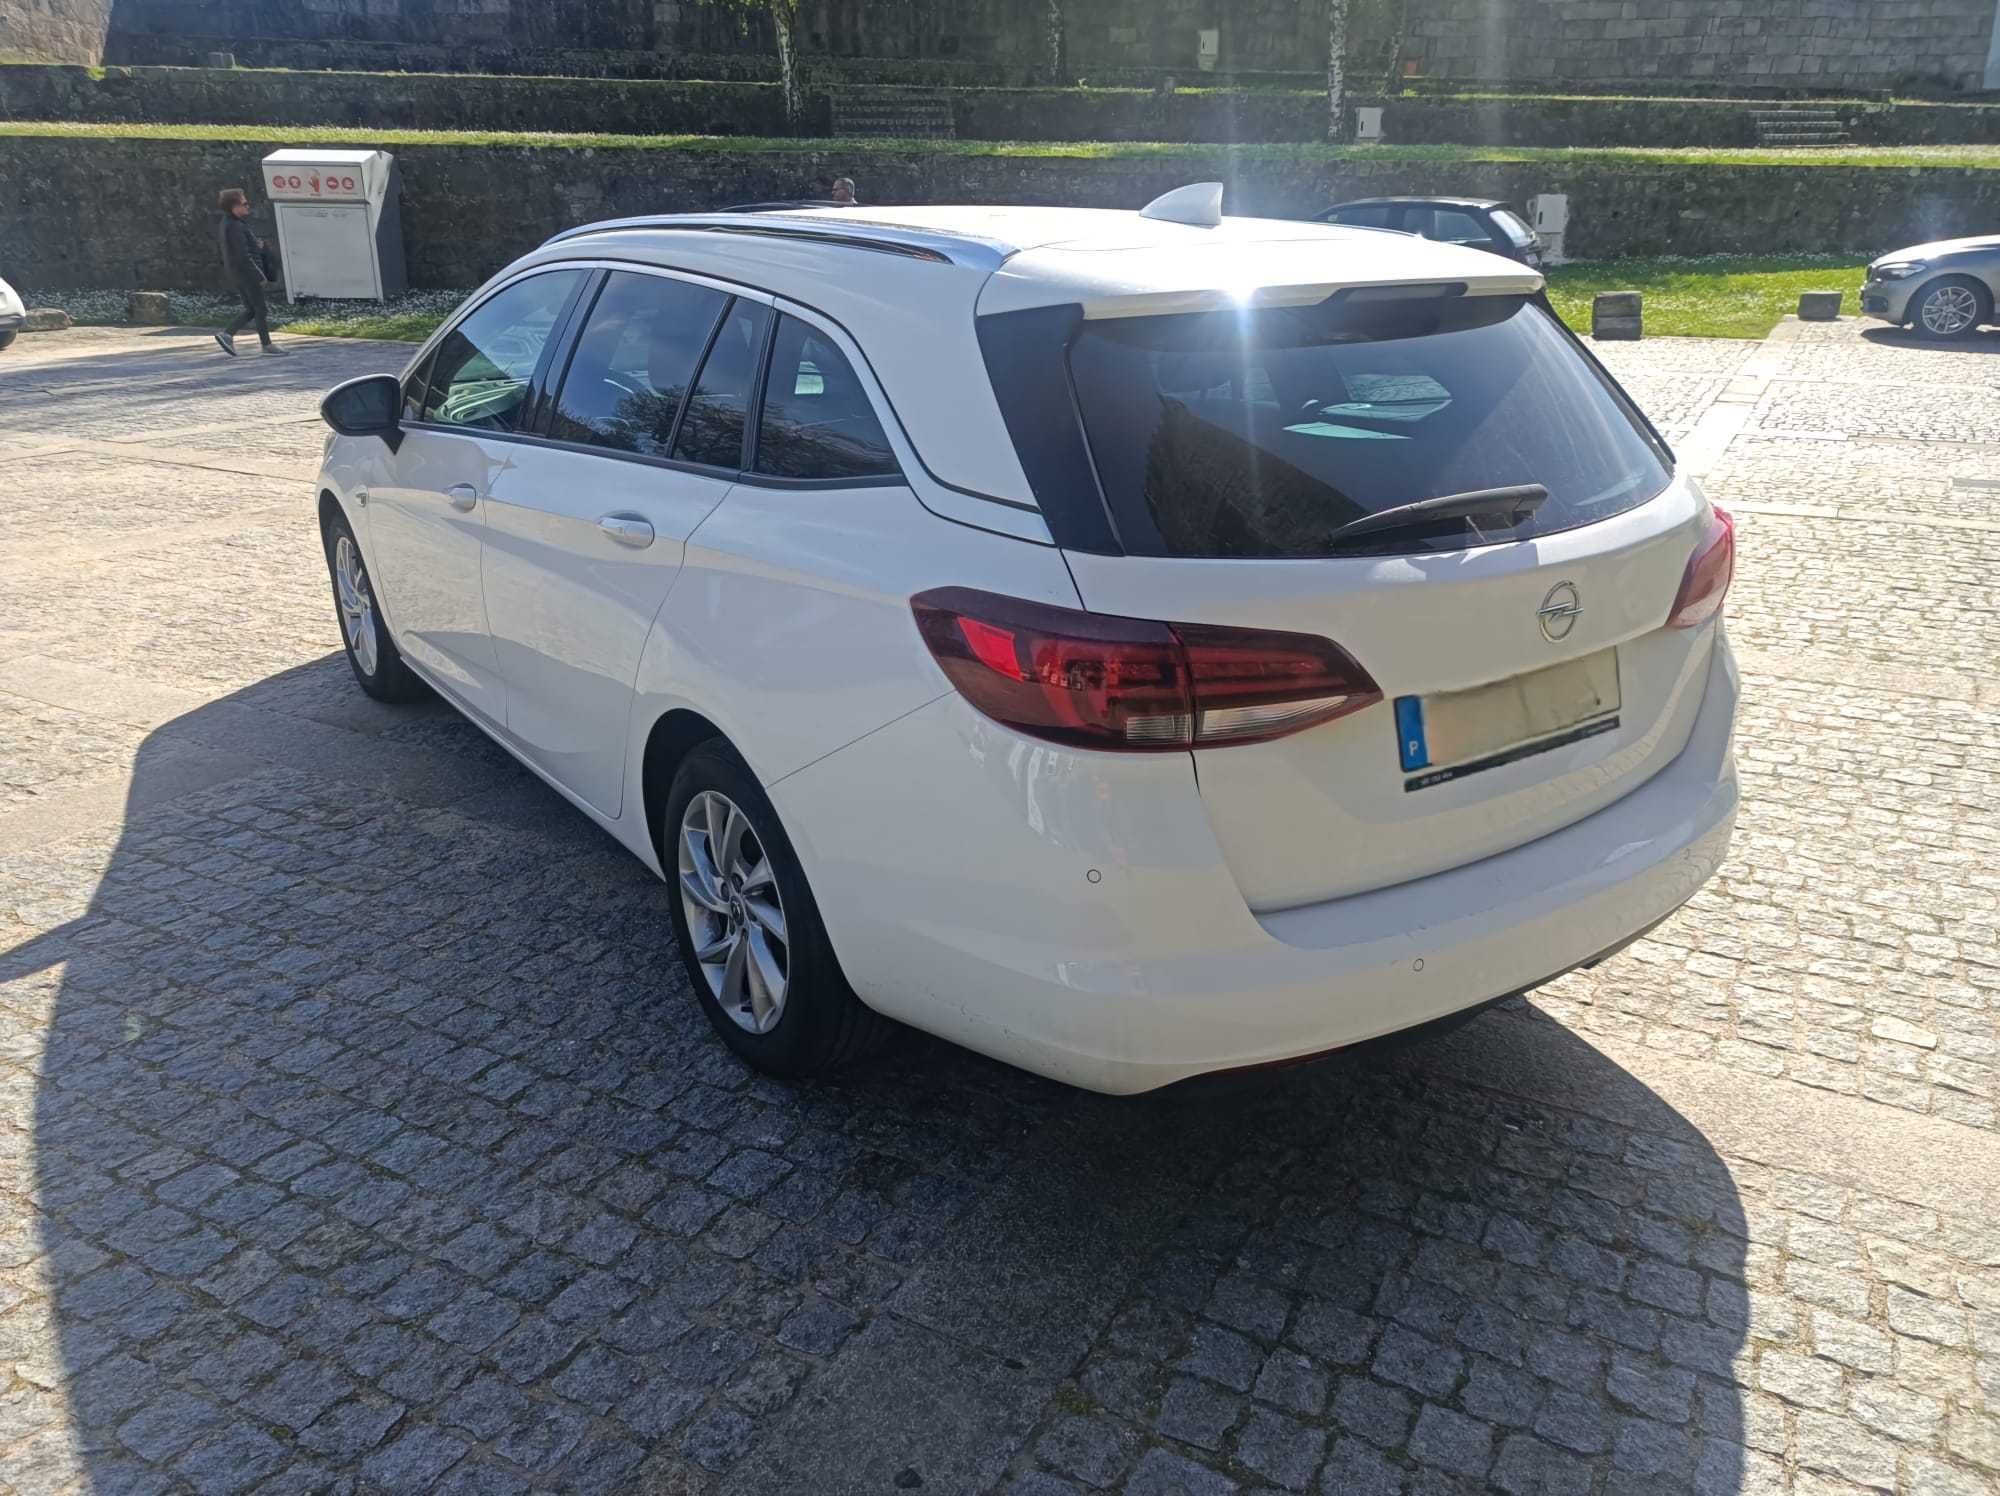 Opel Astra Sports Tourer 1.6cdti FULL EXTRAS